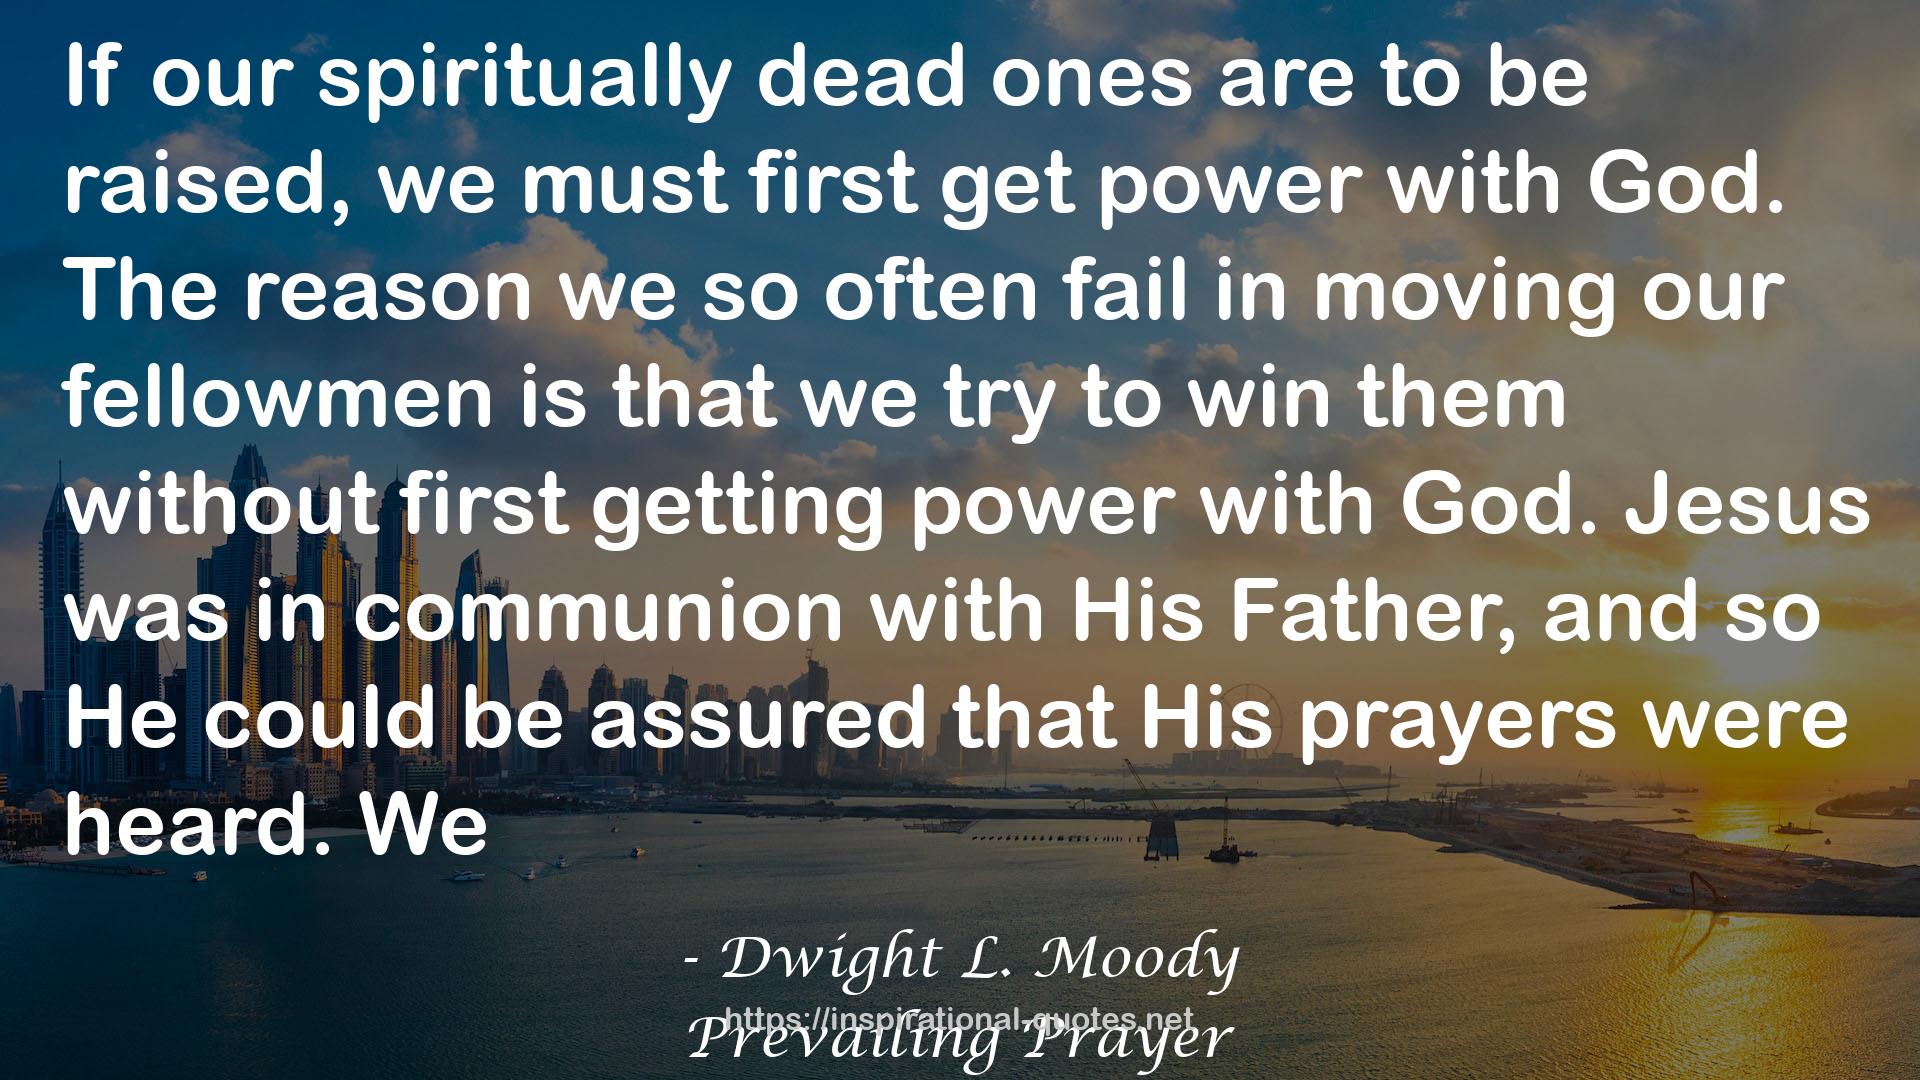 Prevailing Prayer QUOTES